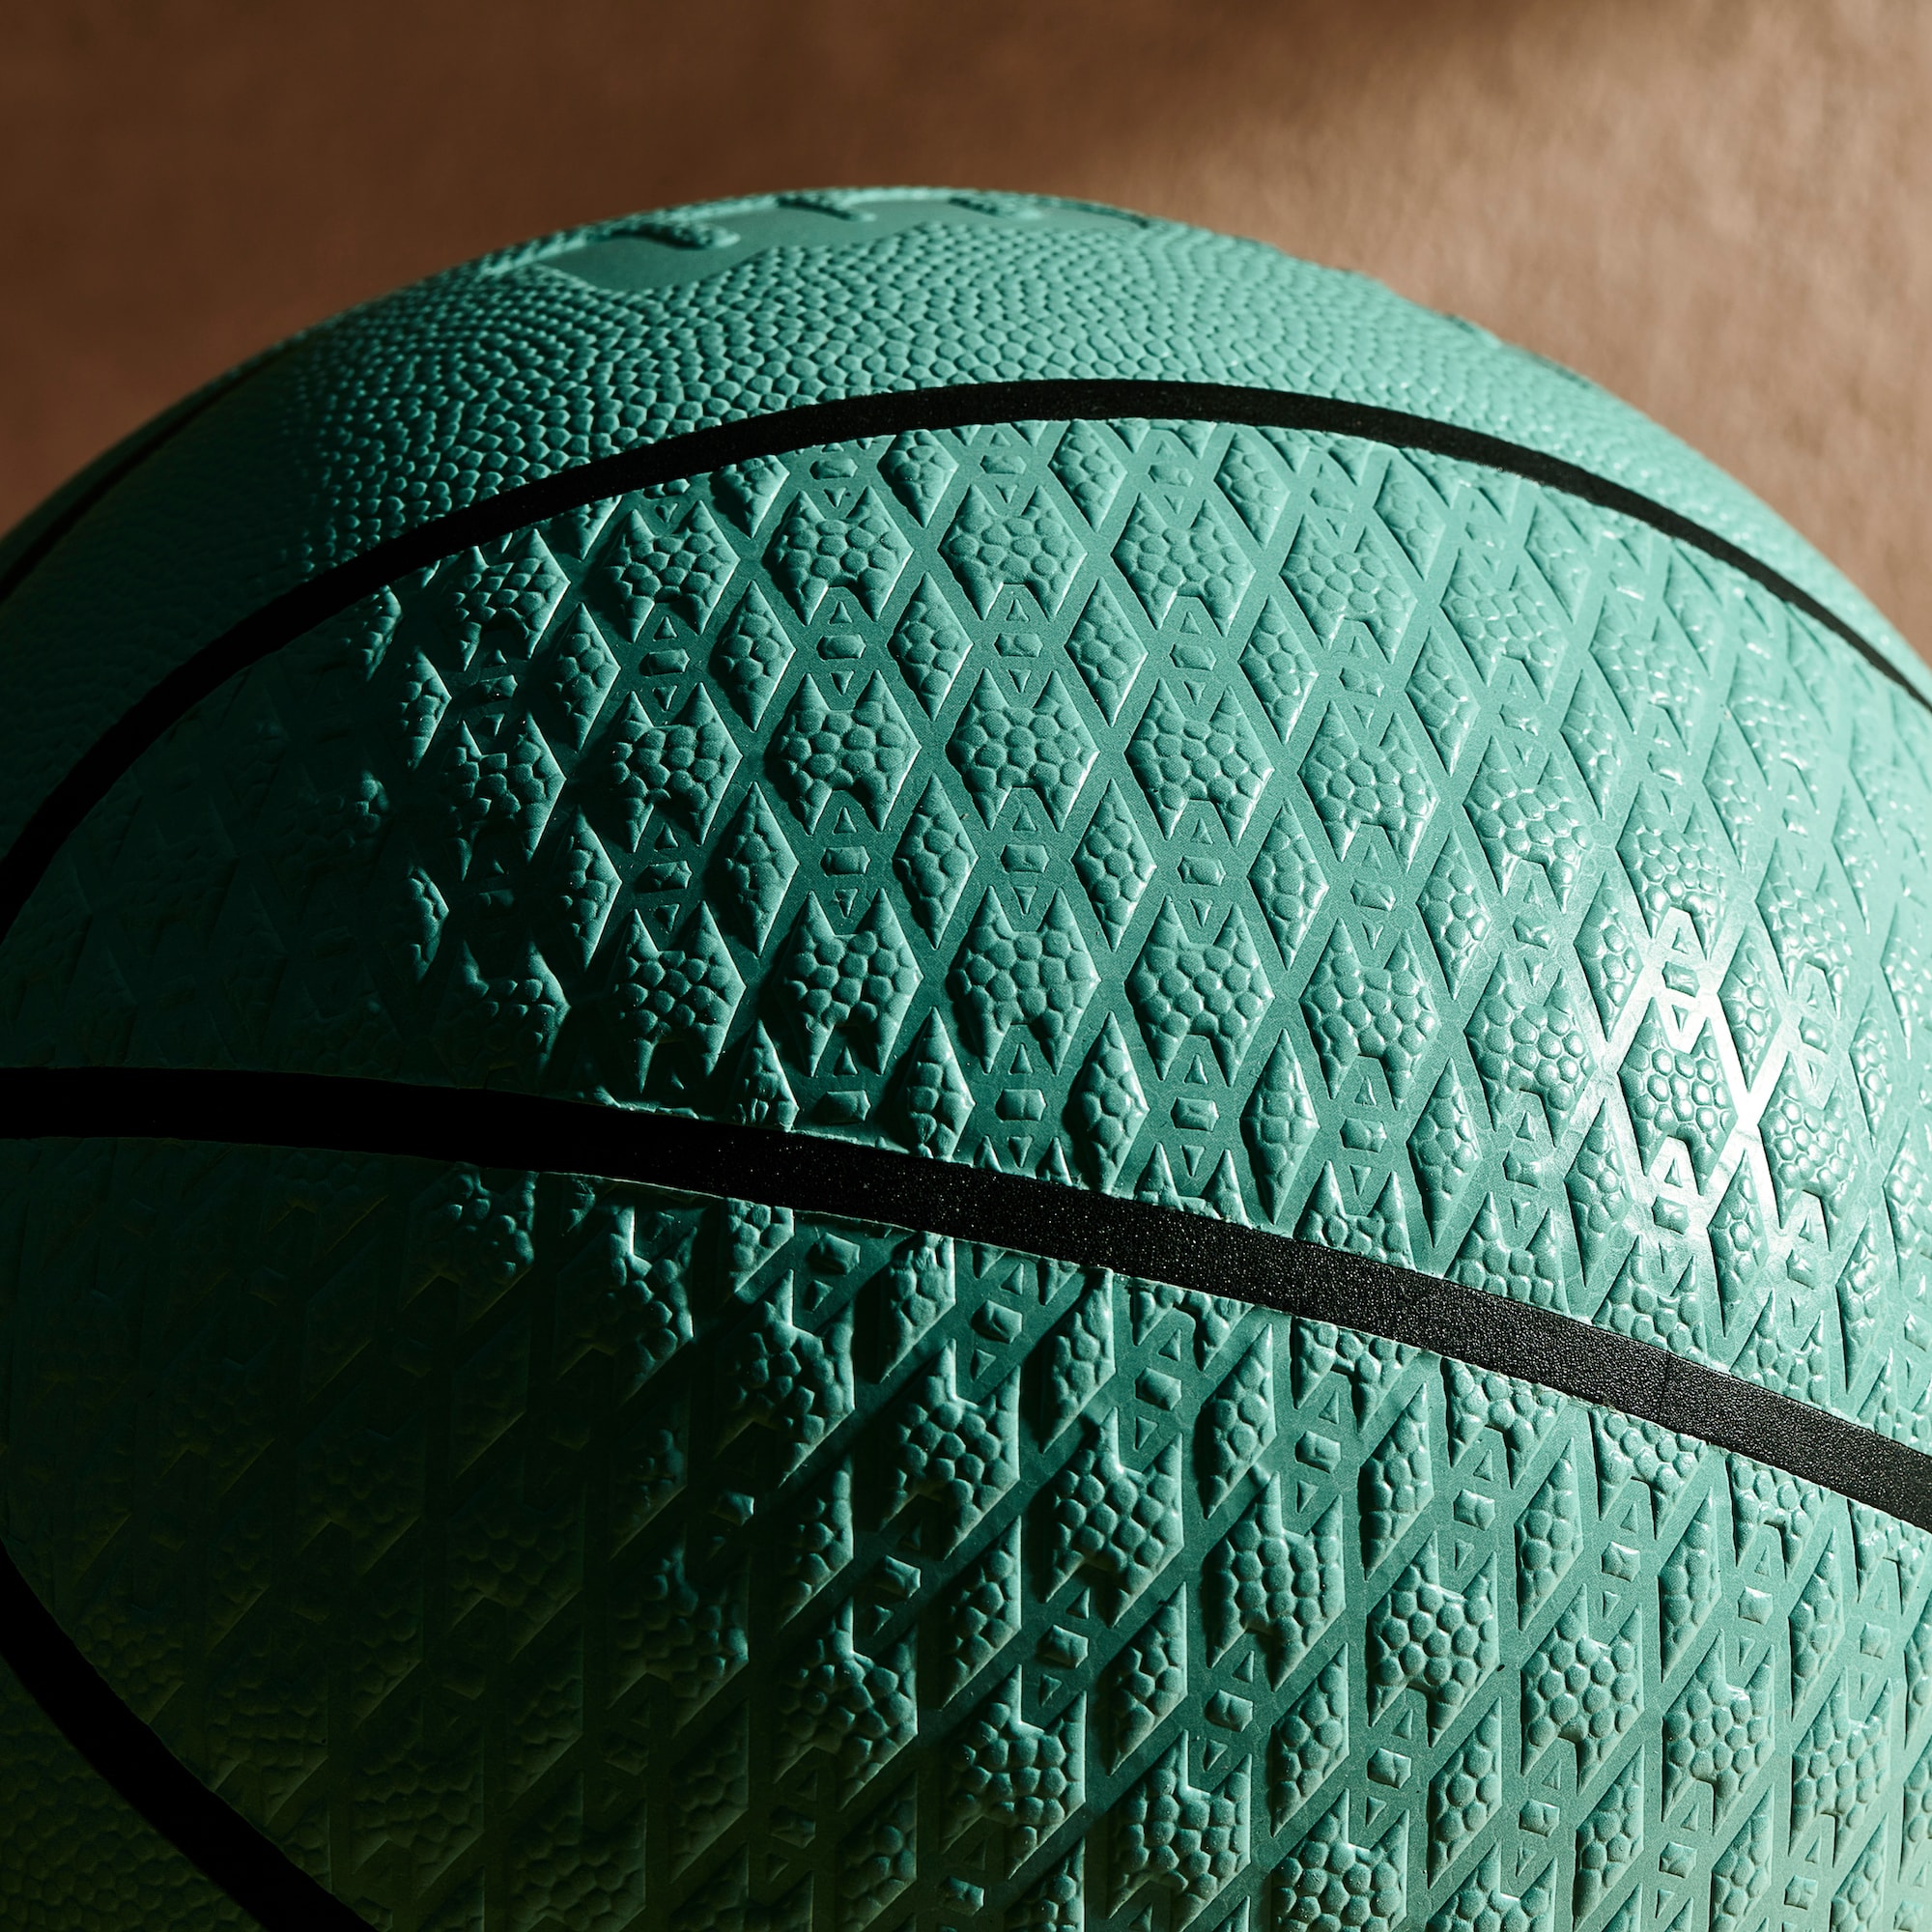 Tiffany & Co. 携手 Daniel Arsham 打造限量版 Tiffany Blue 篮球